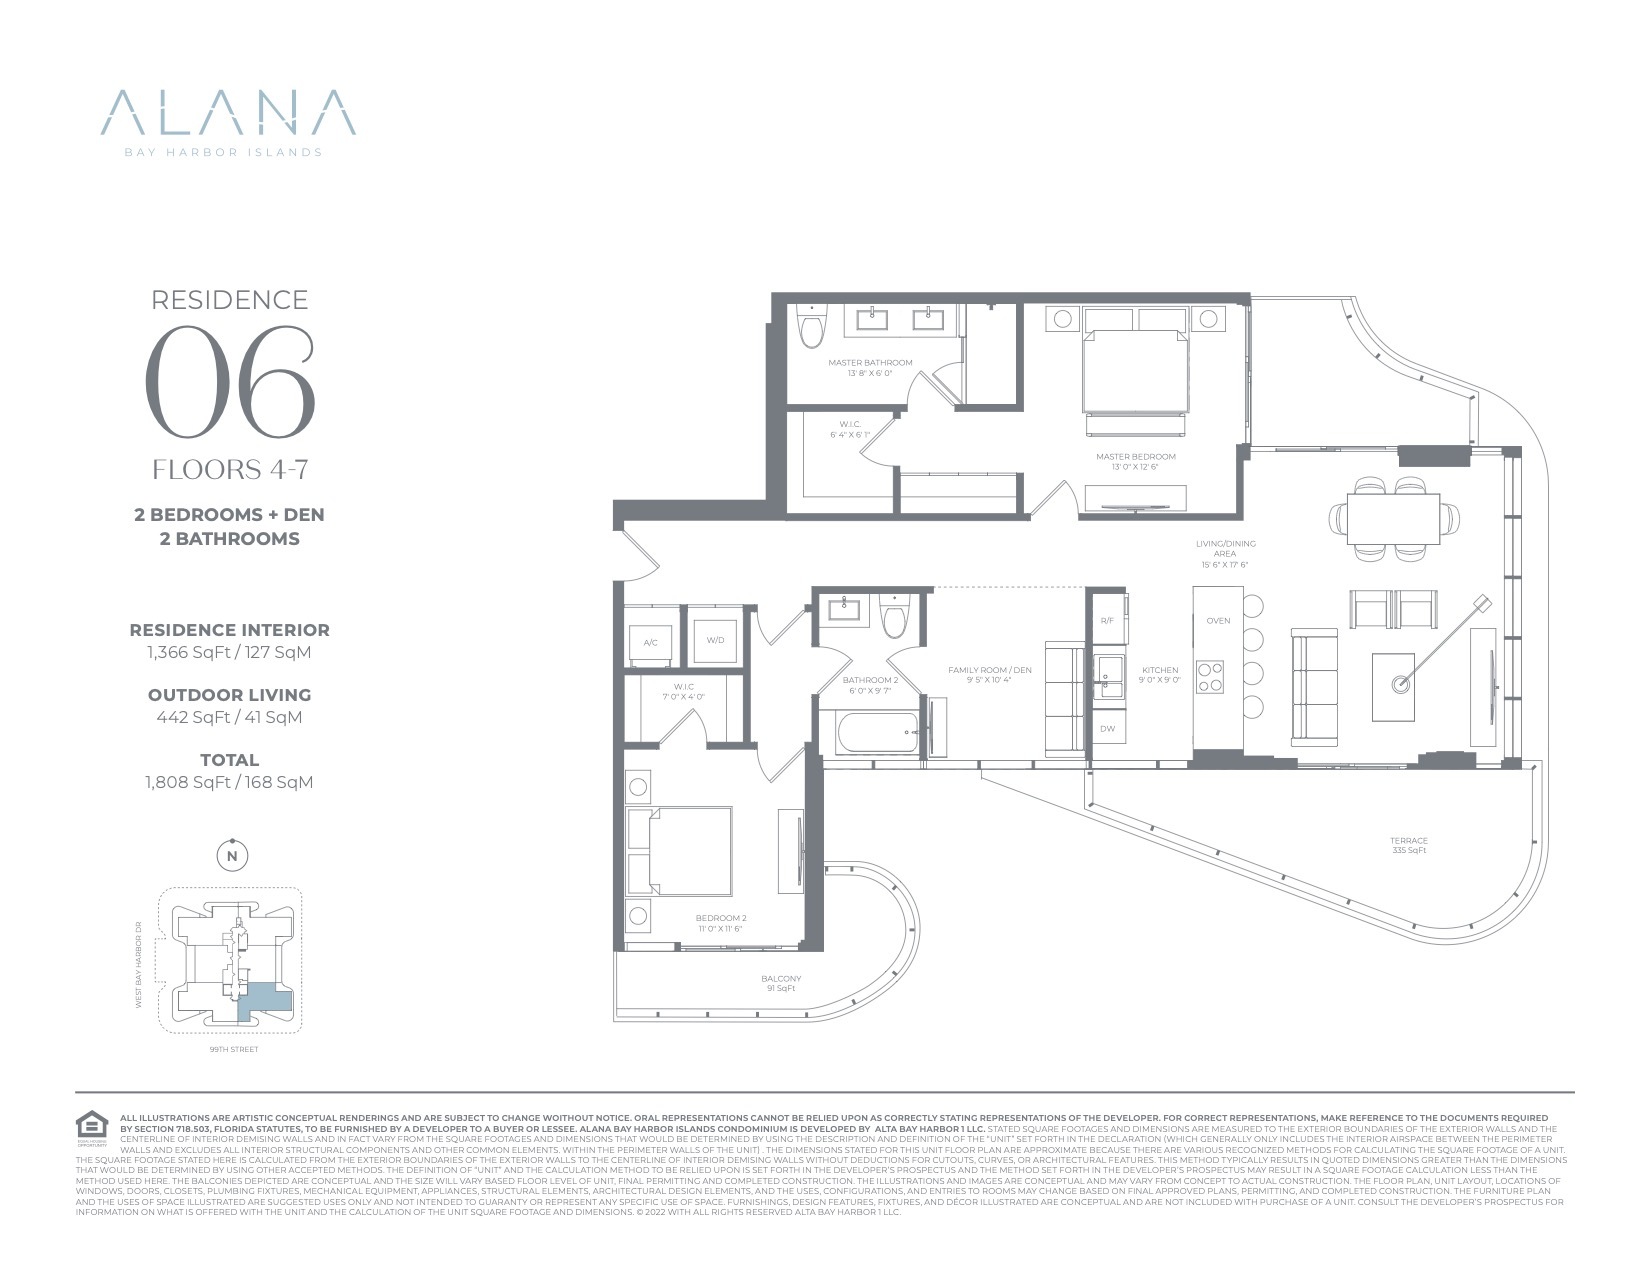 Floor Plan for Alana Bay Harbor Island Floorplans, Residence 06 Floors 4-7